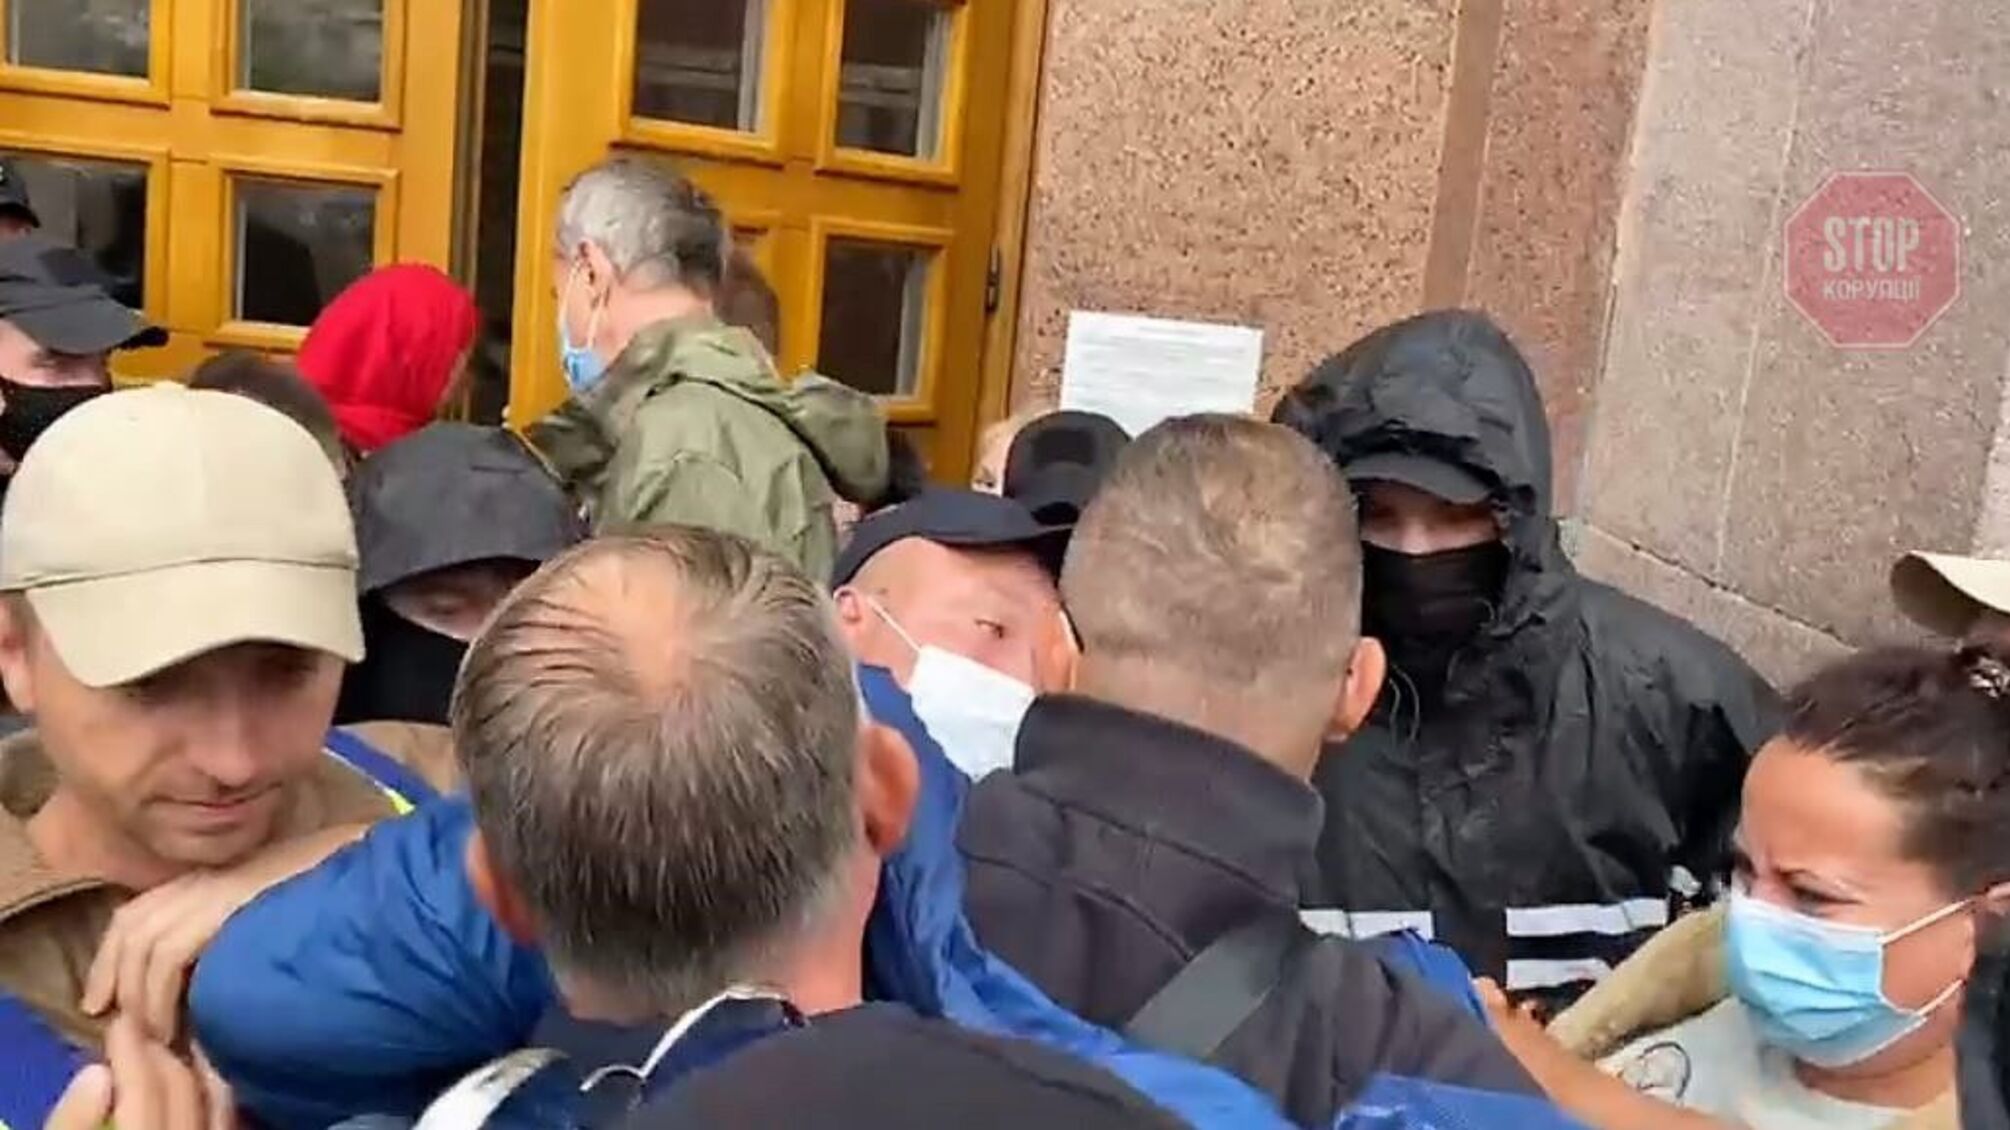 Титушки от киевского застройщика: под КГГА произошли столкновения (видео)